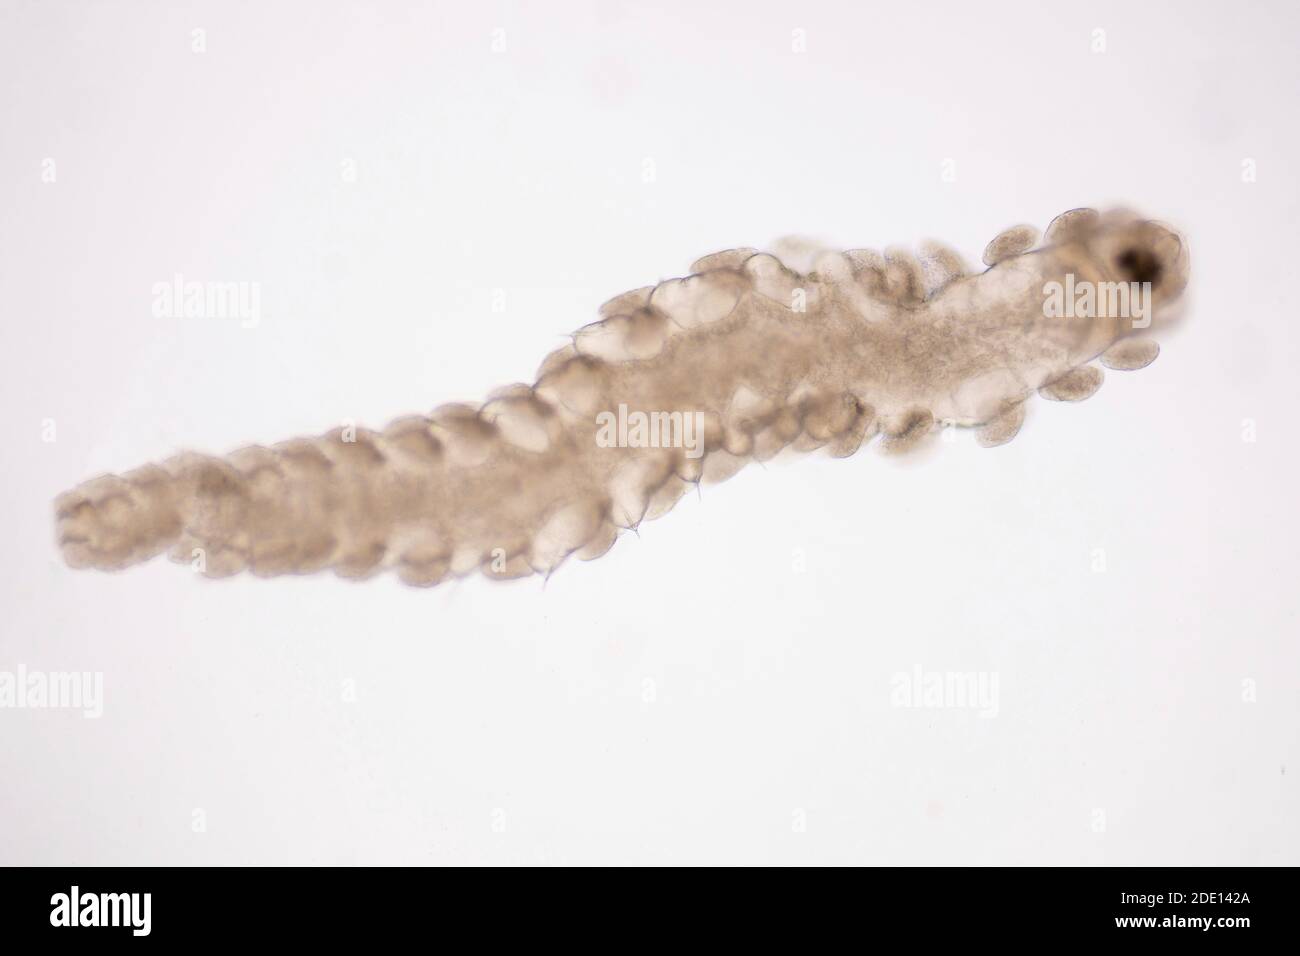 Bristle worm, light micrograph Stock Photo